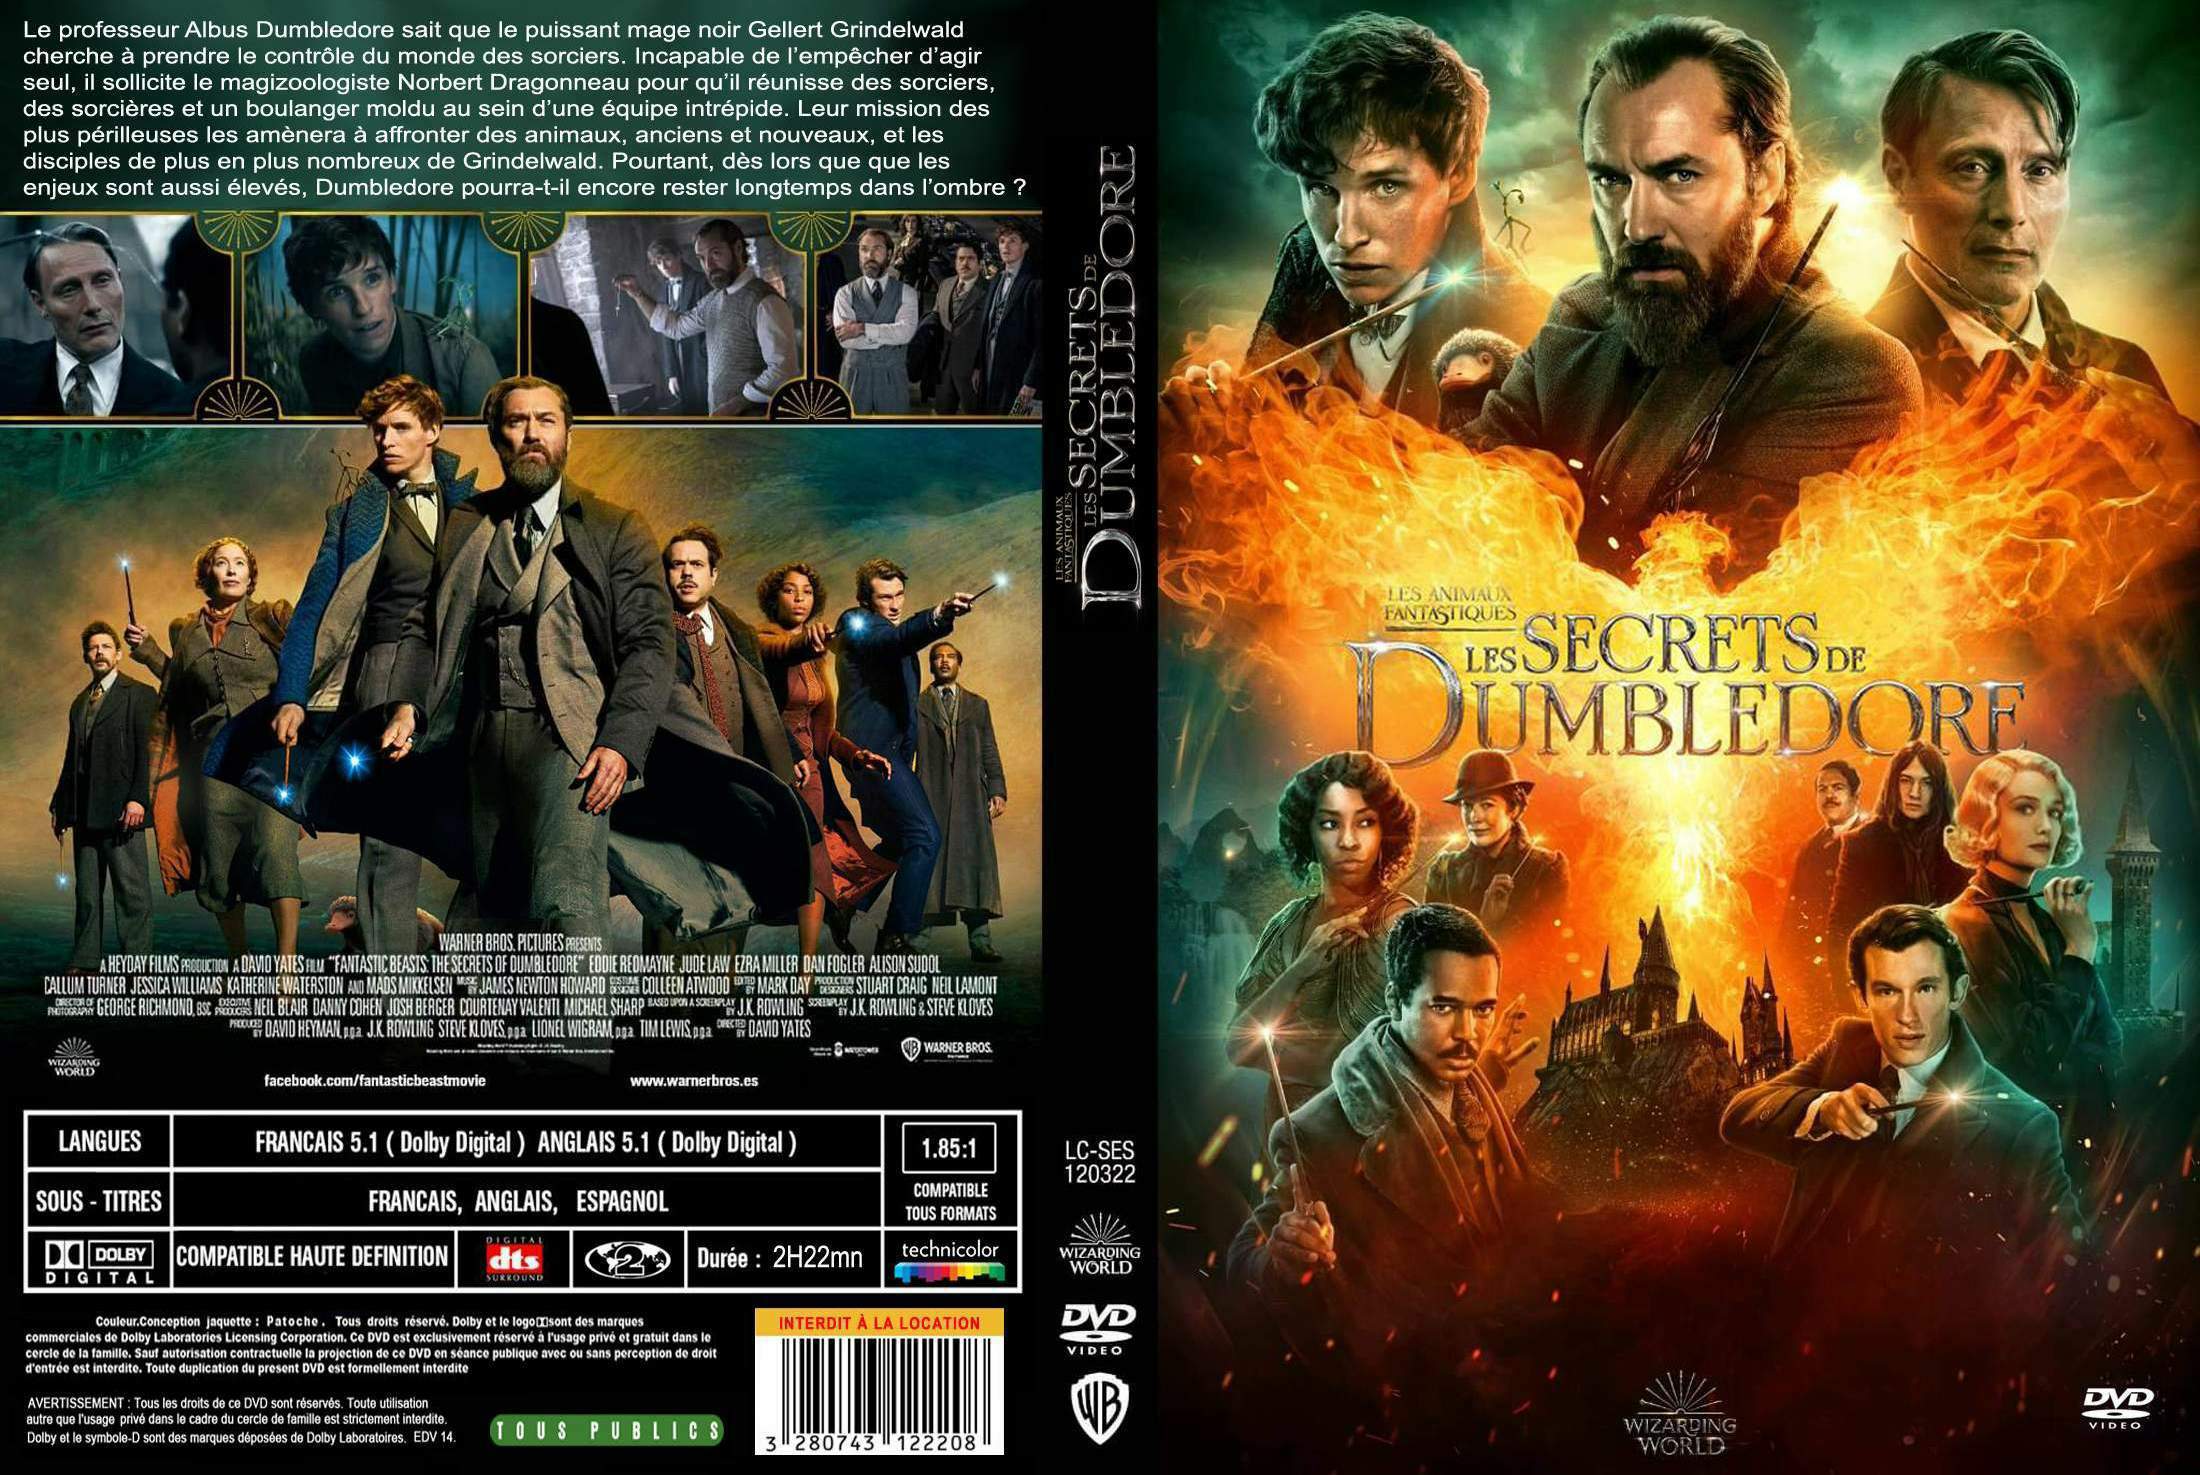 Jaquette DVD Les animaux fantastiques Les secrets de Dumbledore custom